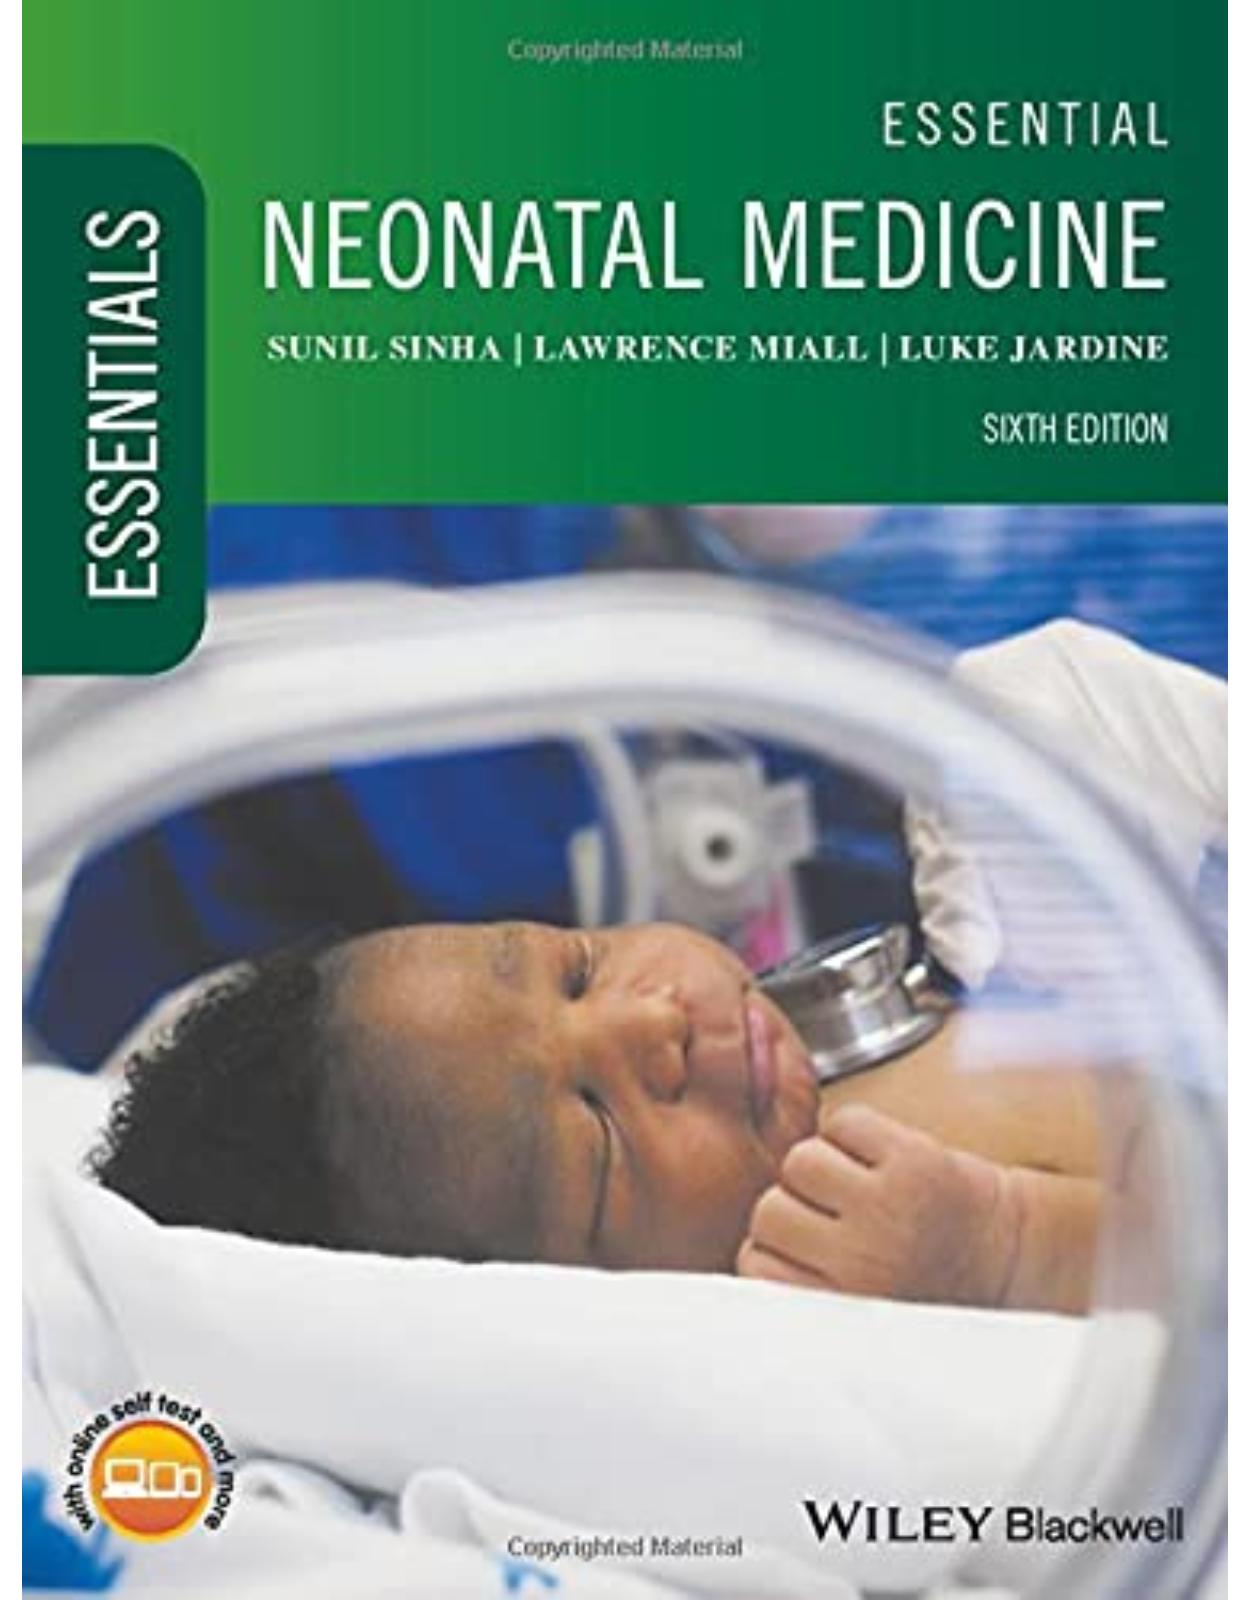 Essential Neonatal Medicine, 6th Edition